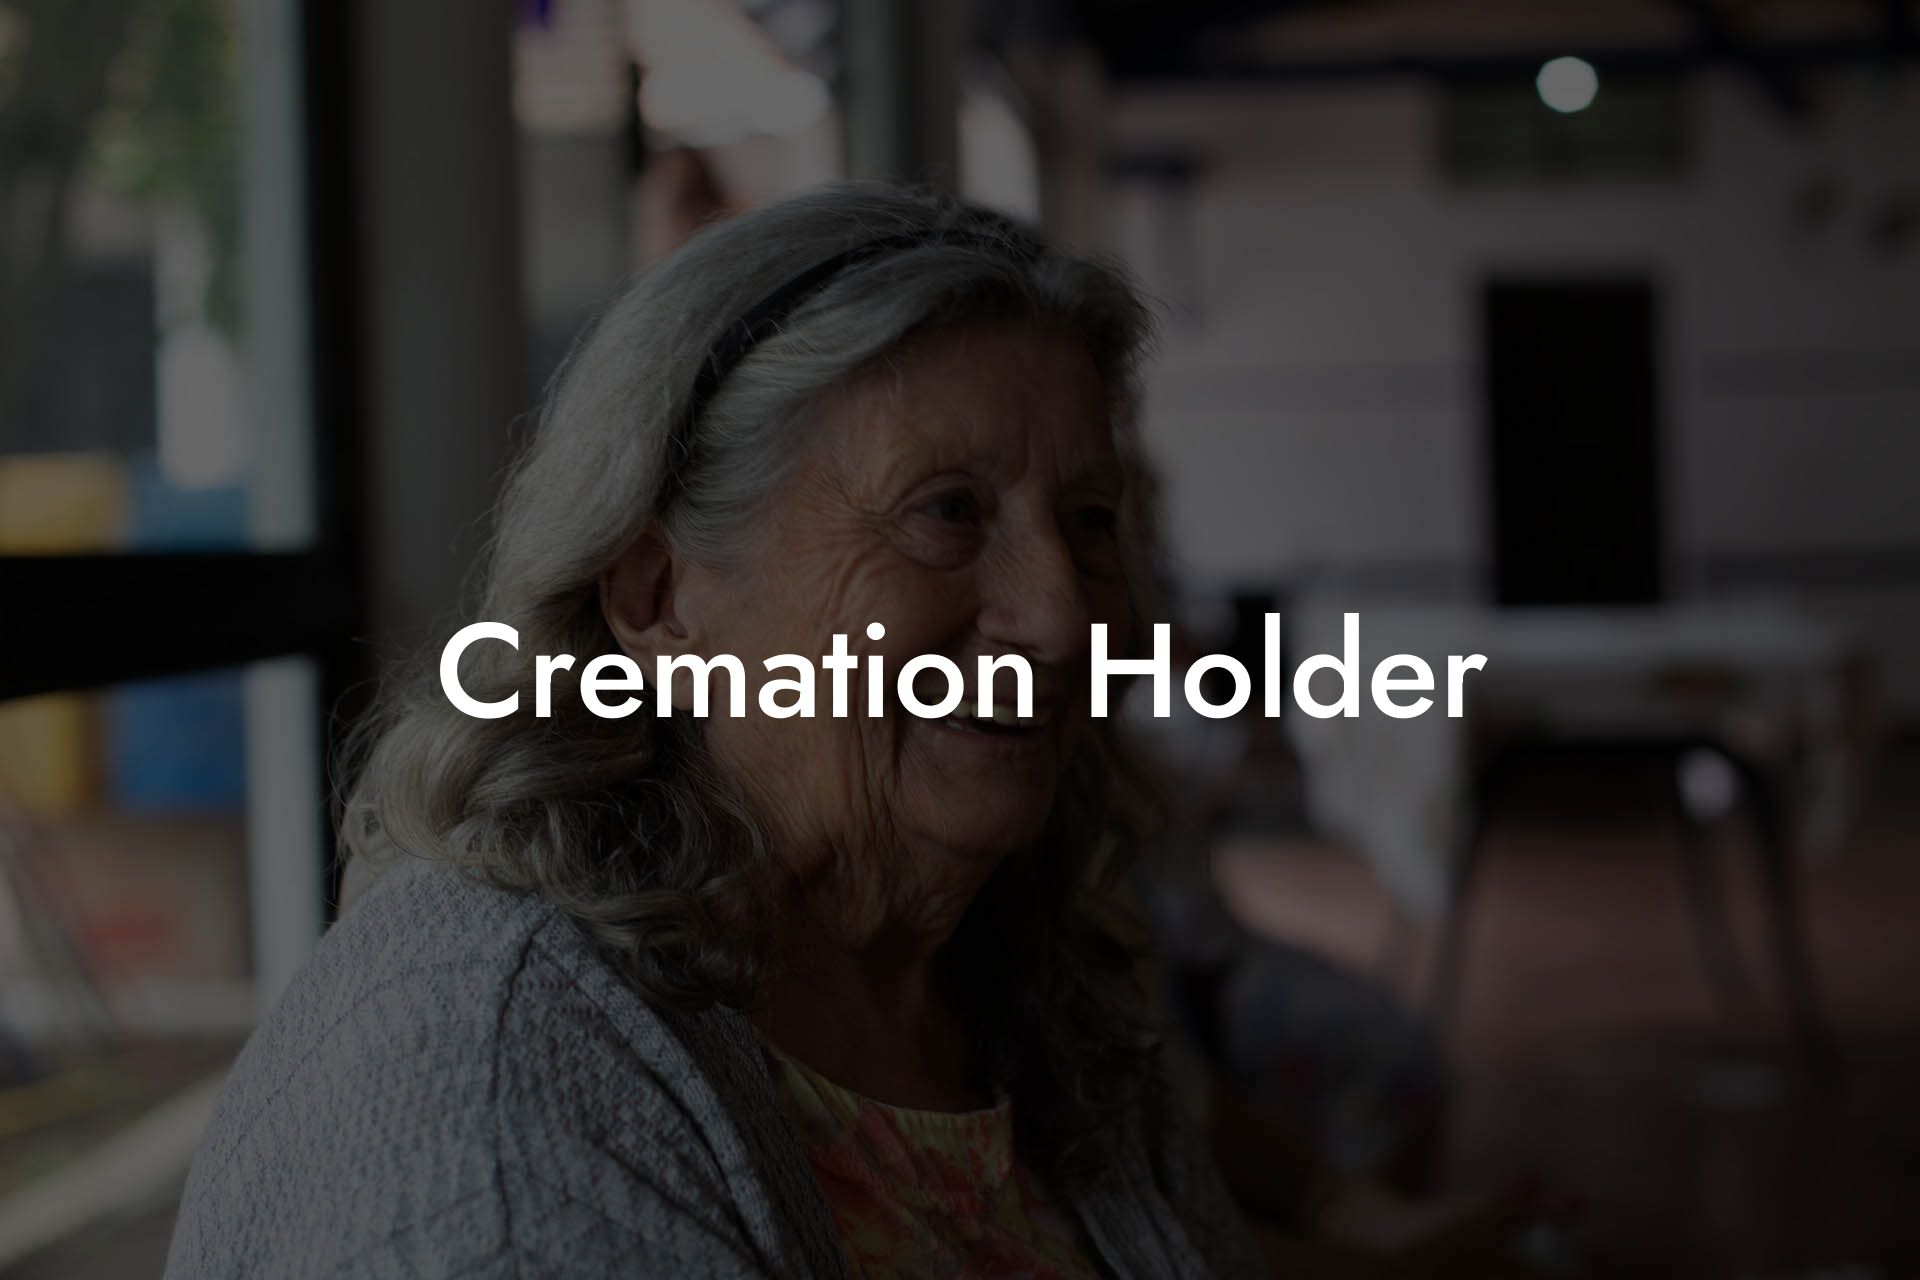 Cremation Holder